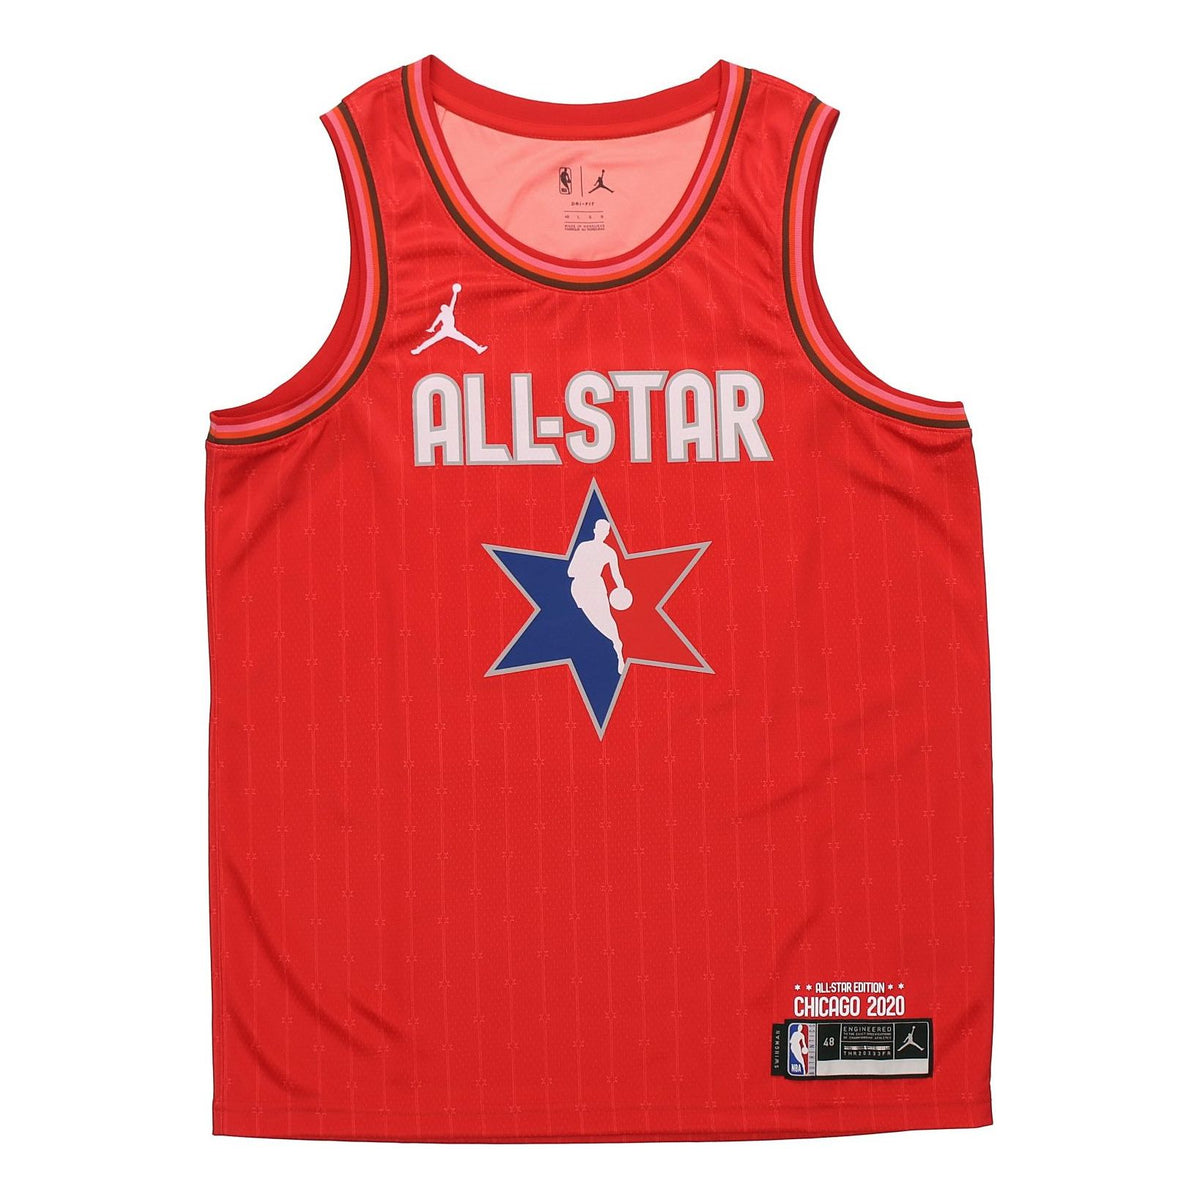 Nike Jordan NBA All-Star Edition Swingman Jersey - Giannis Antetokounmpo NBA2020 Red (Men's/All Star) CJ1063-662 US XL